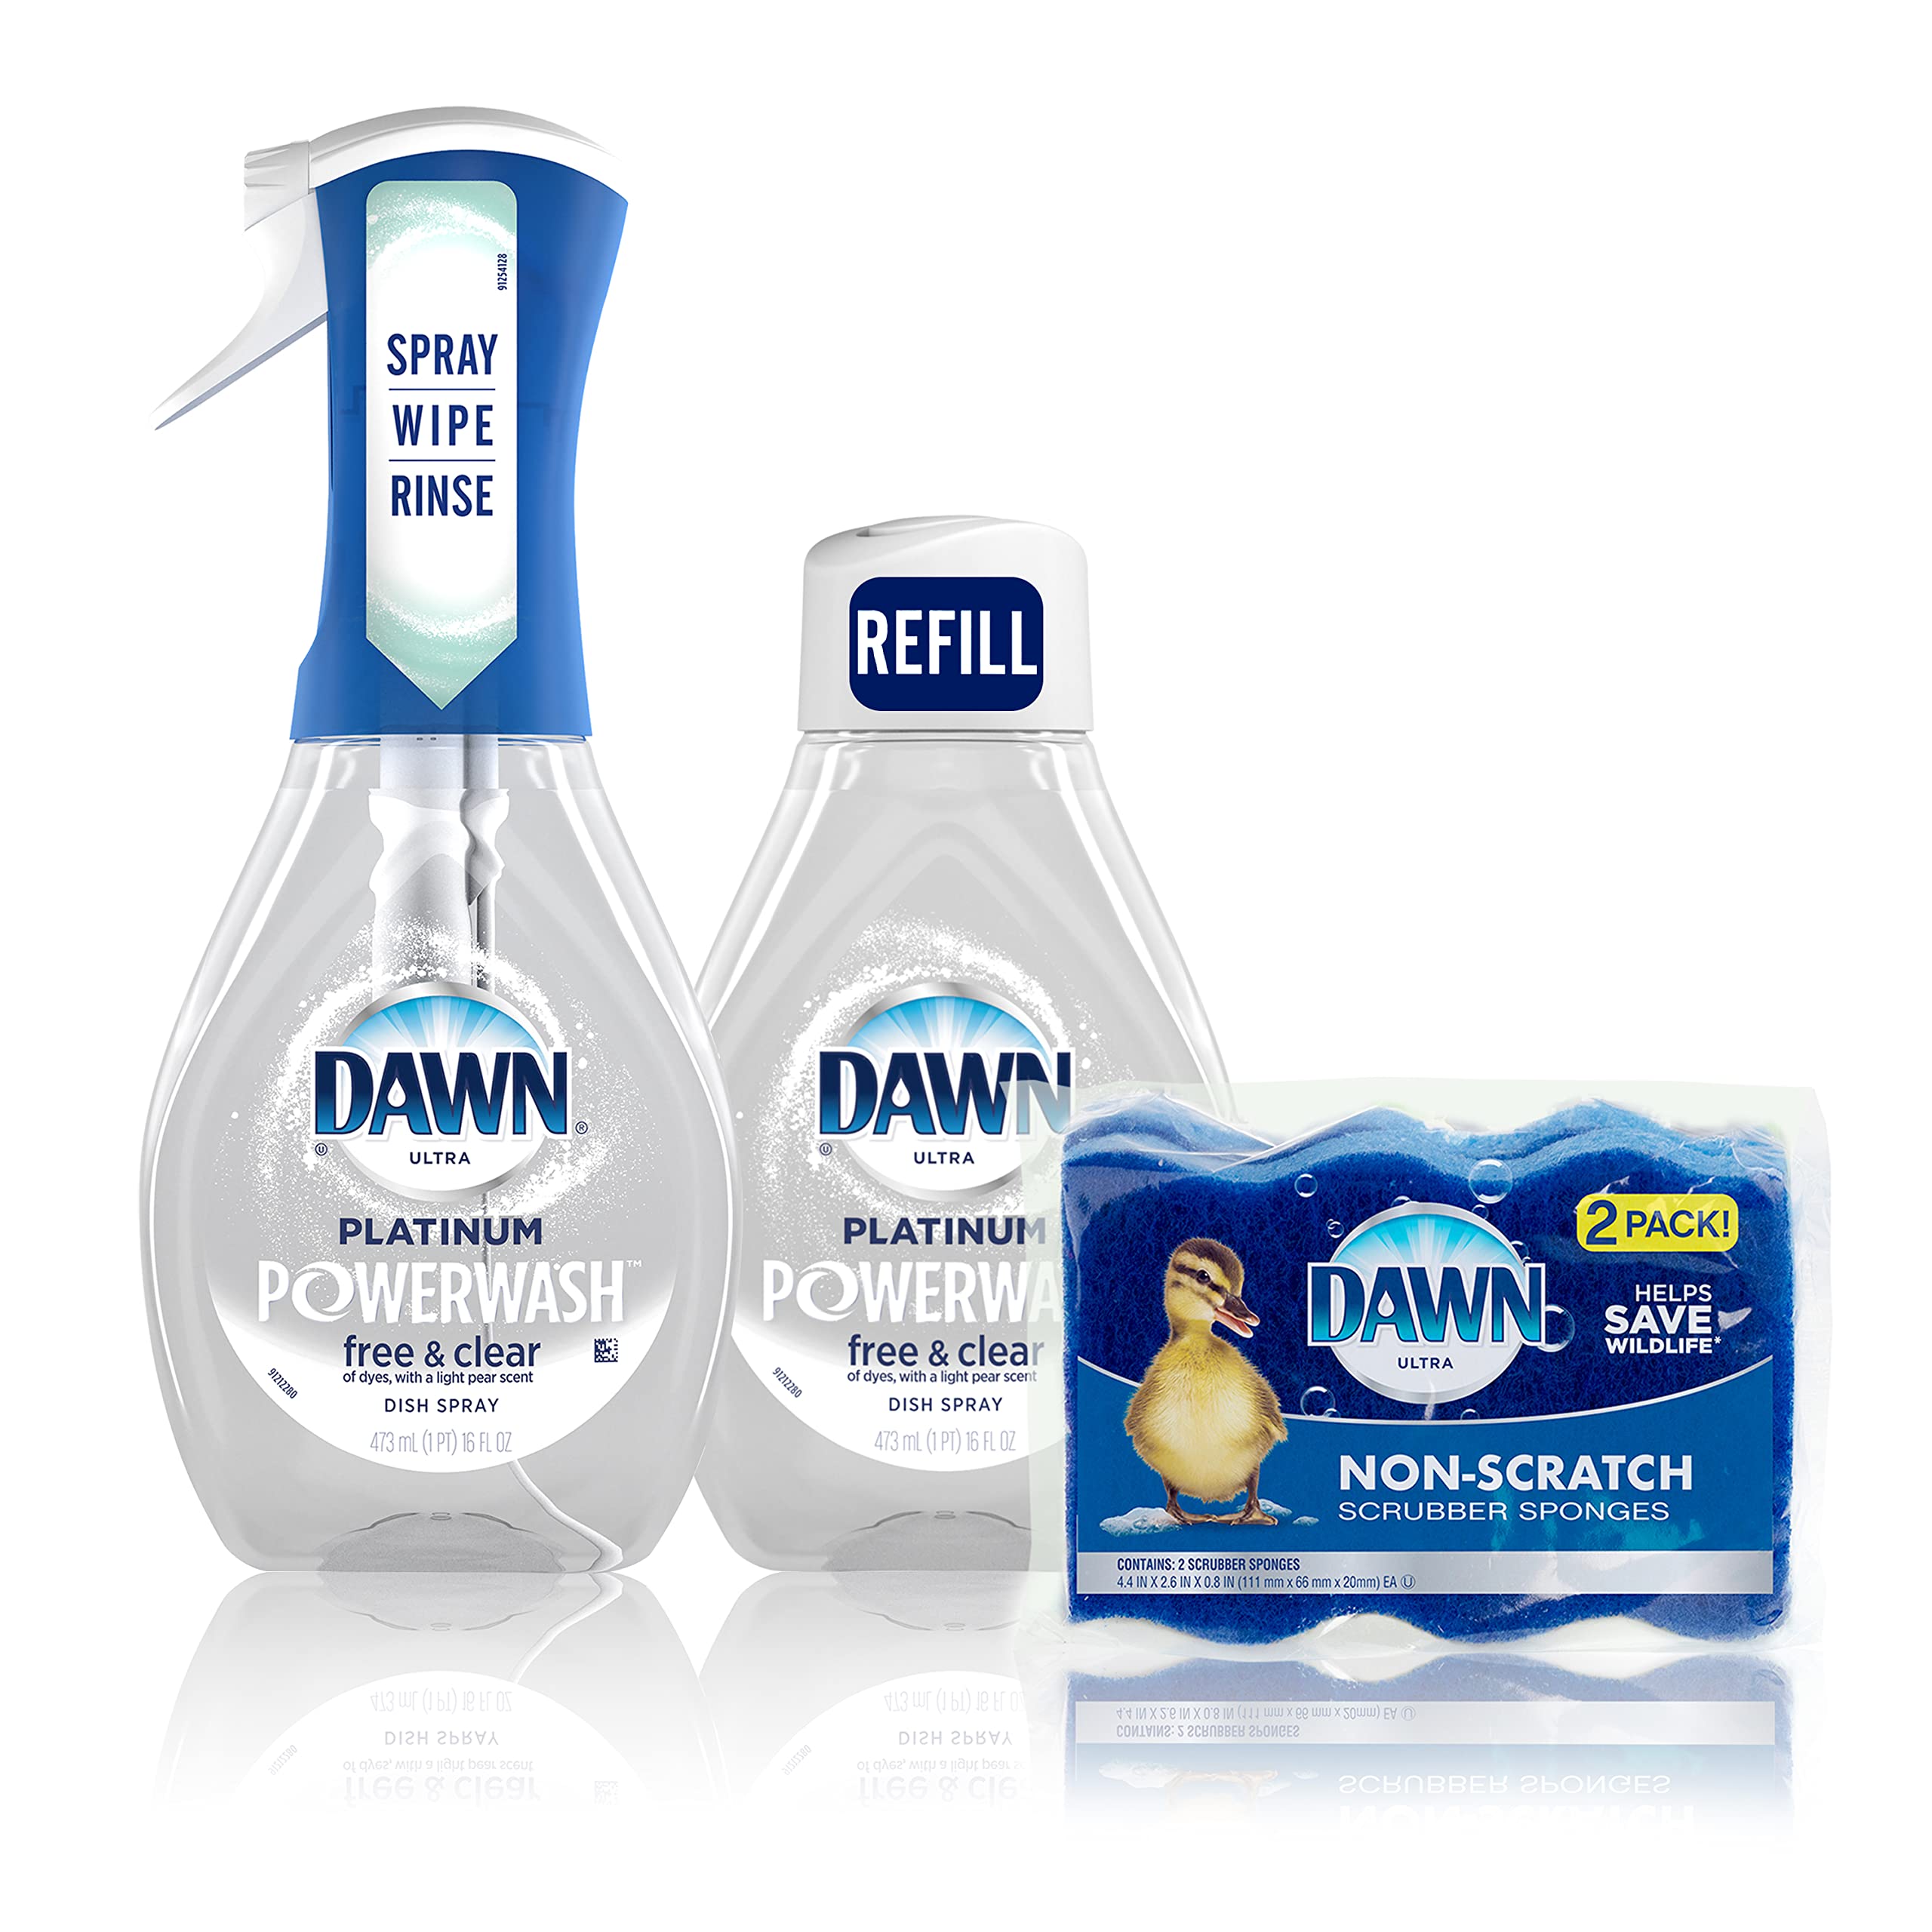 Dawn Ultra Platinum Powerwash Dish Spray Refill, Apple Scent, 16oz (2 Pack)